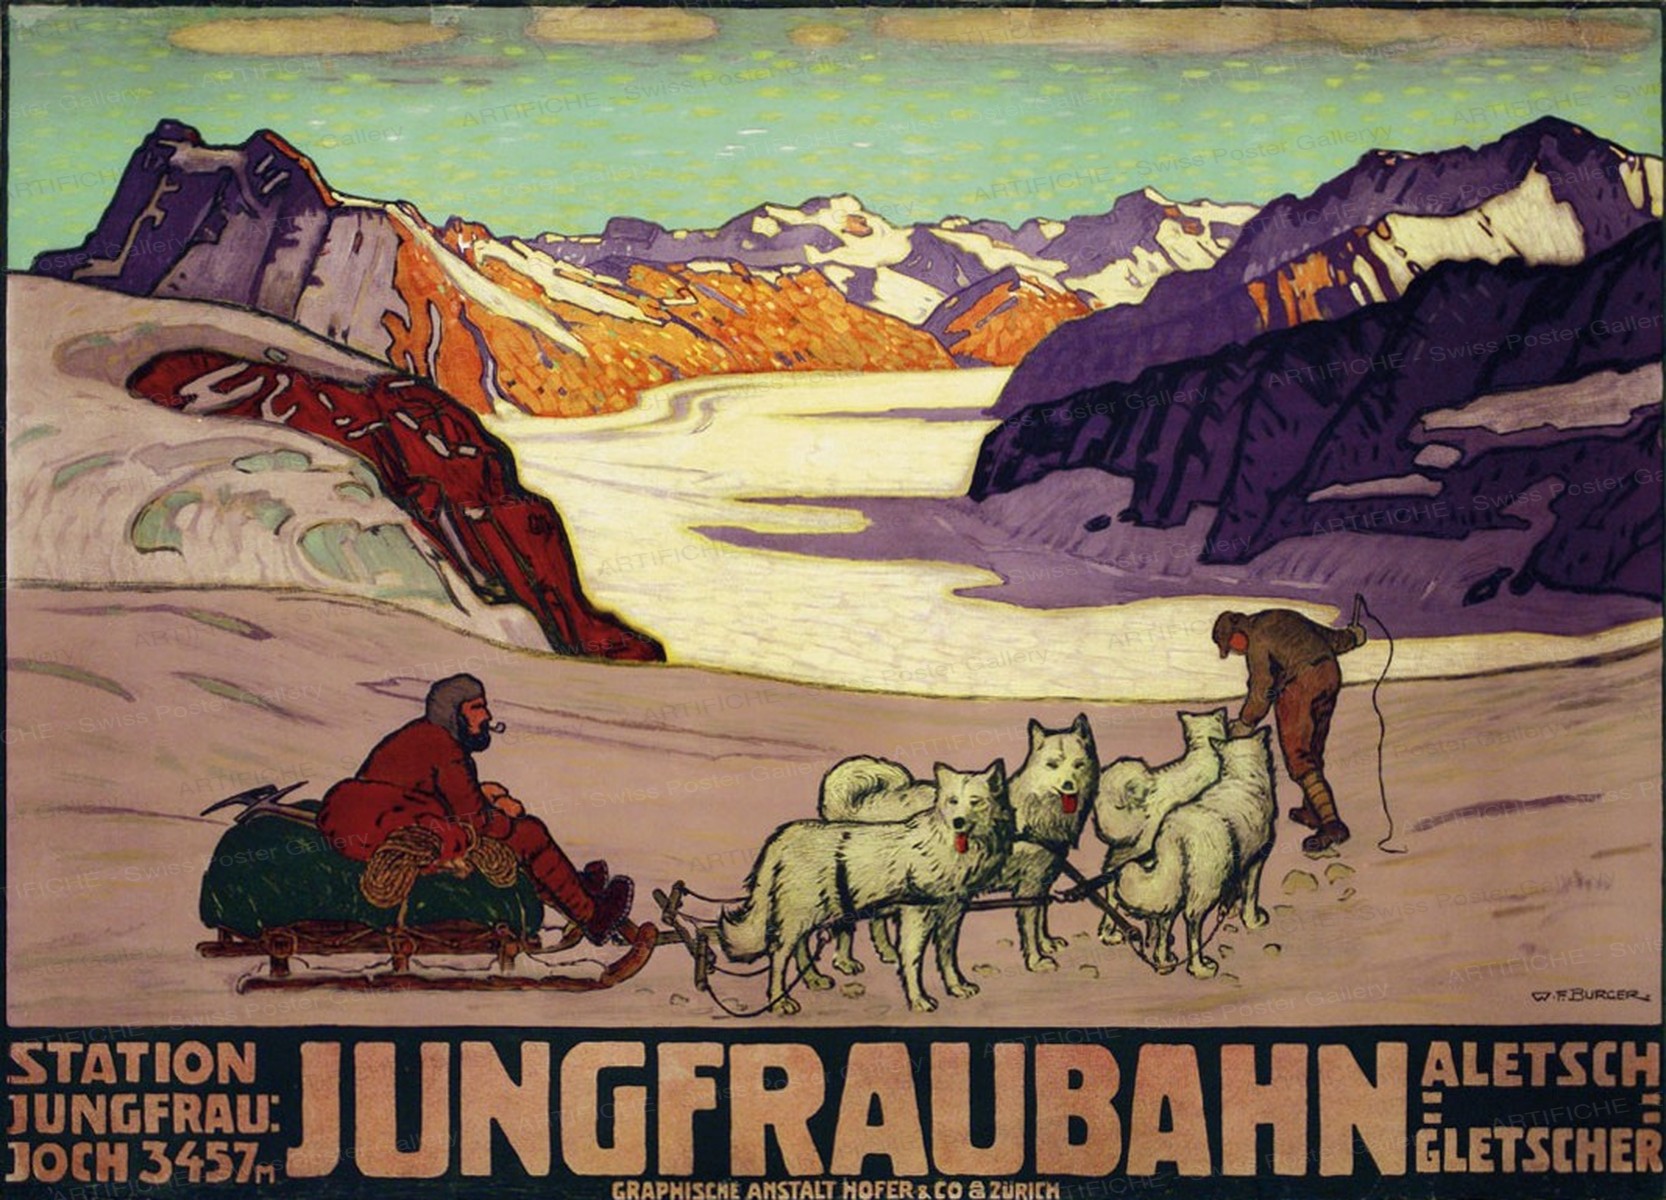 Jungfrau Aletsch Glacier, Wilhelm Friedrich Burger